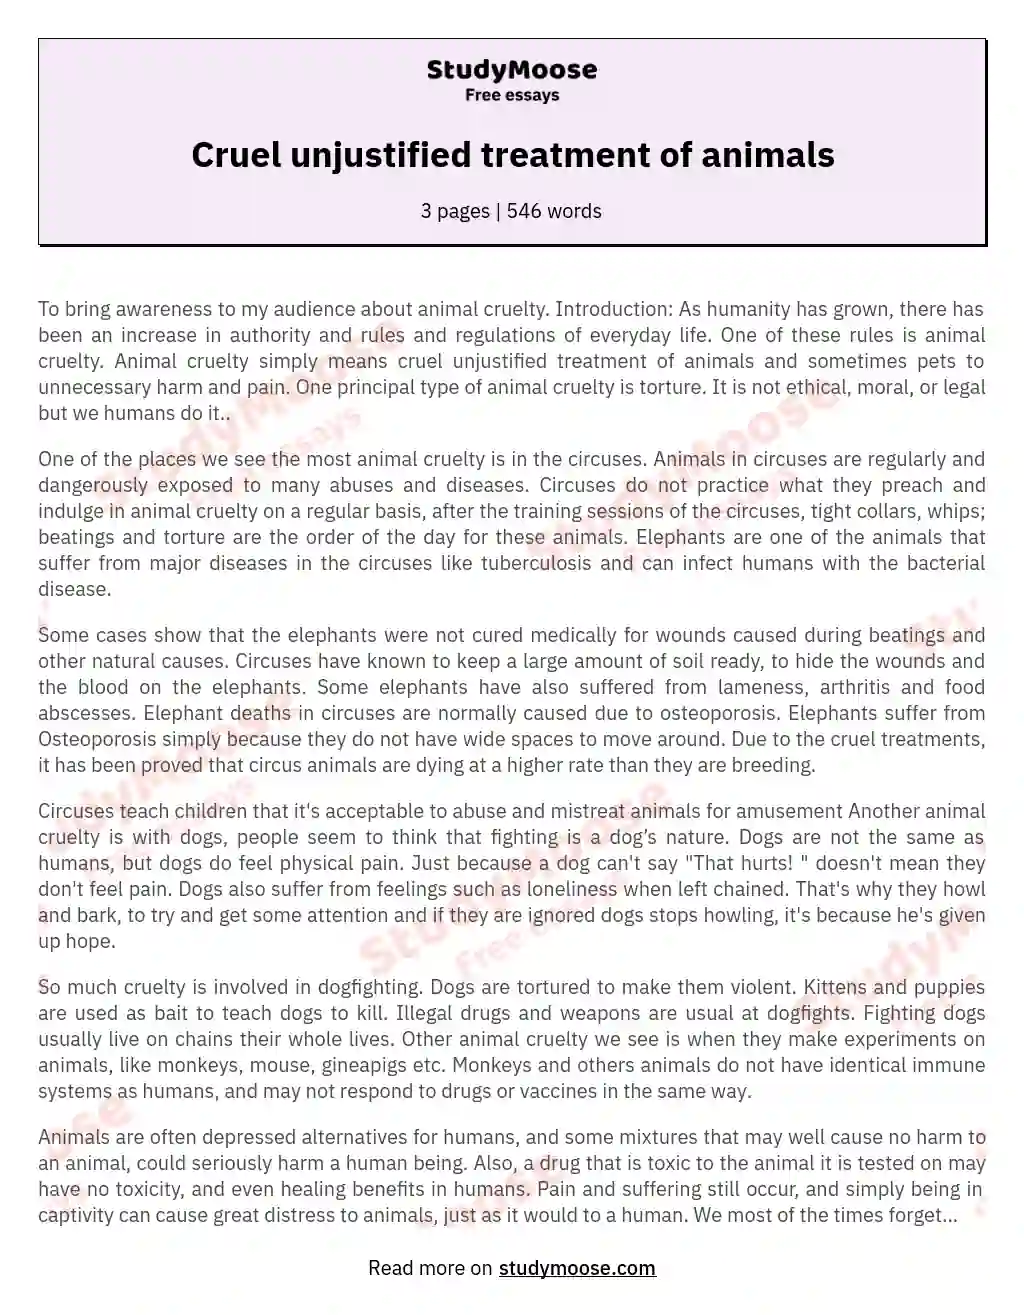 Cruel unjustified treatment of animals